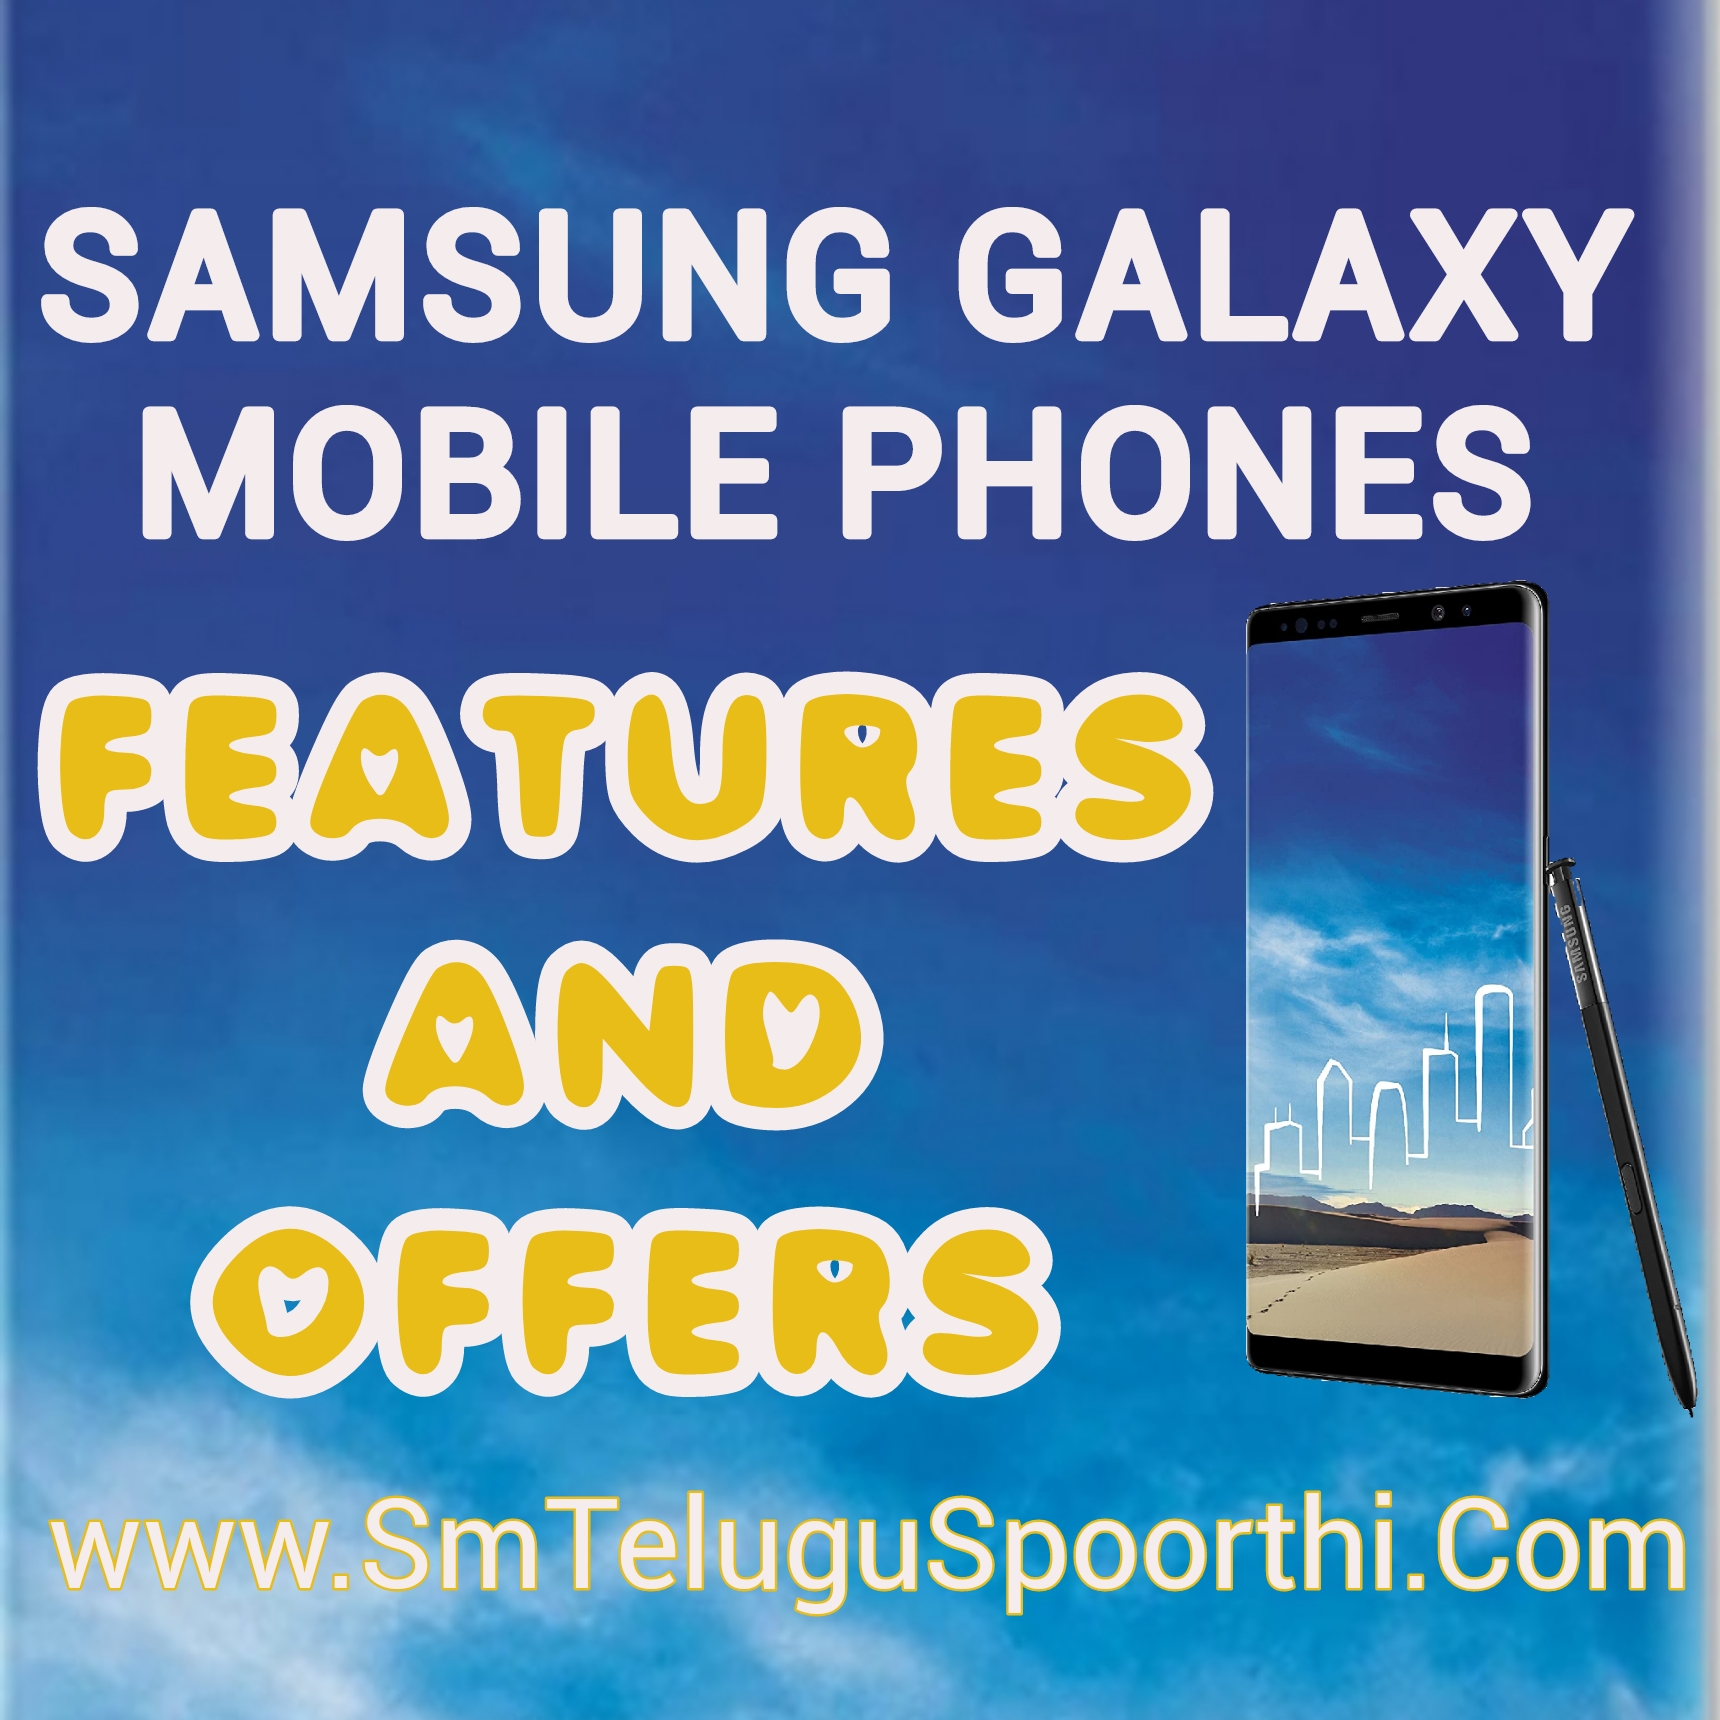 SAMSUNG GALAXY MOBILE PHONES